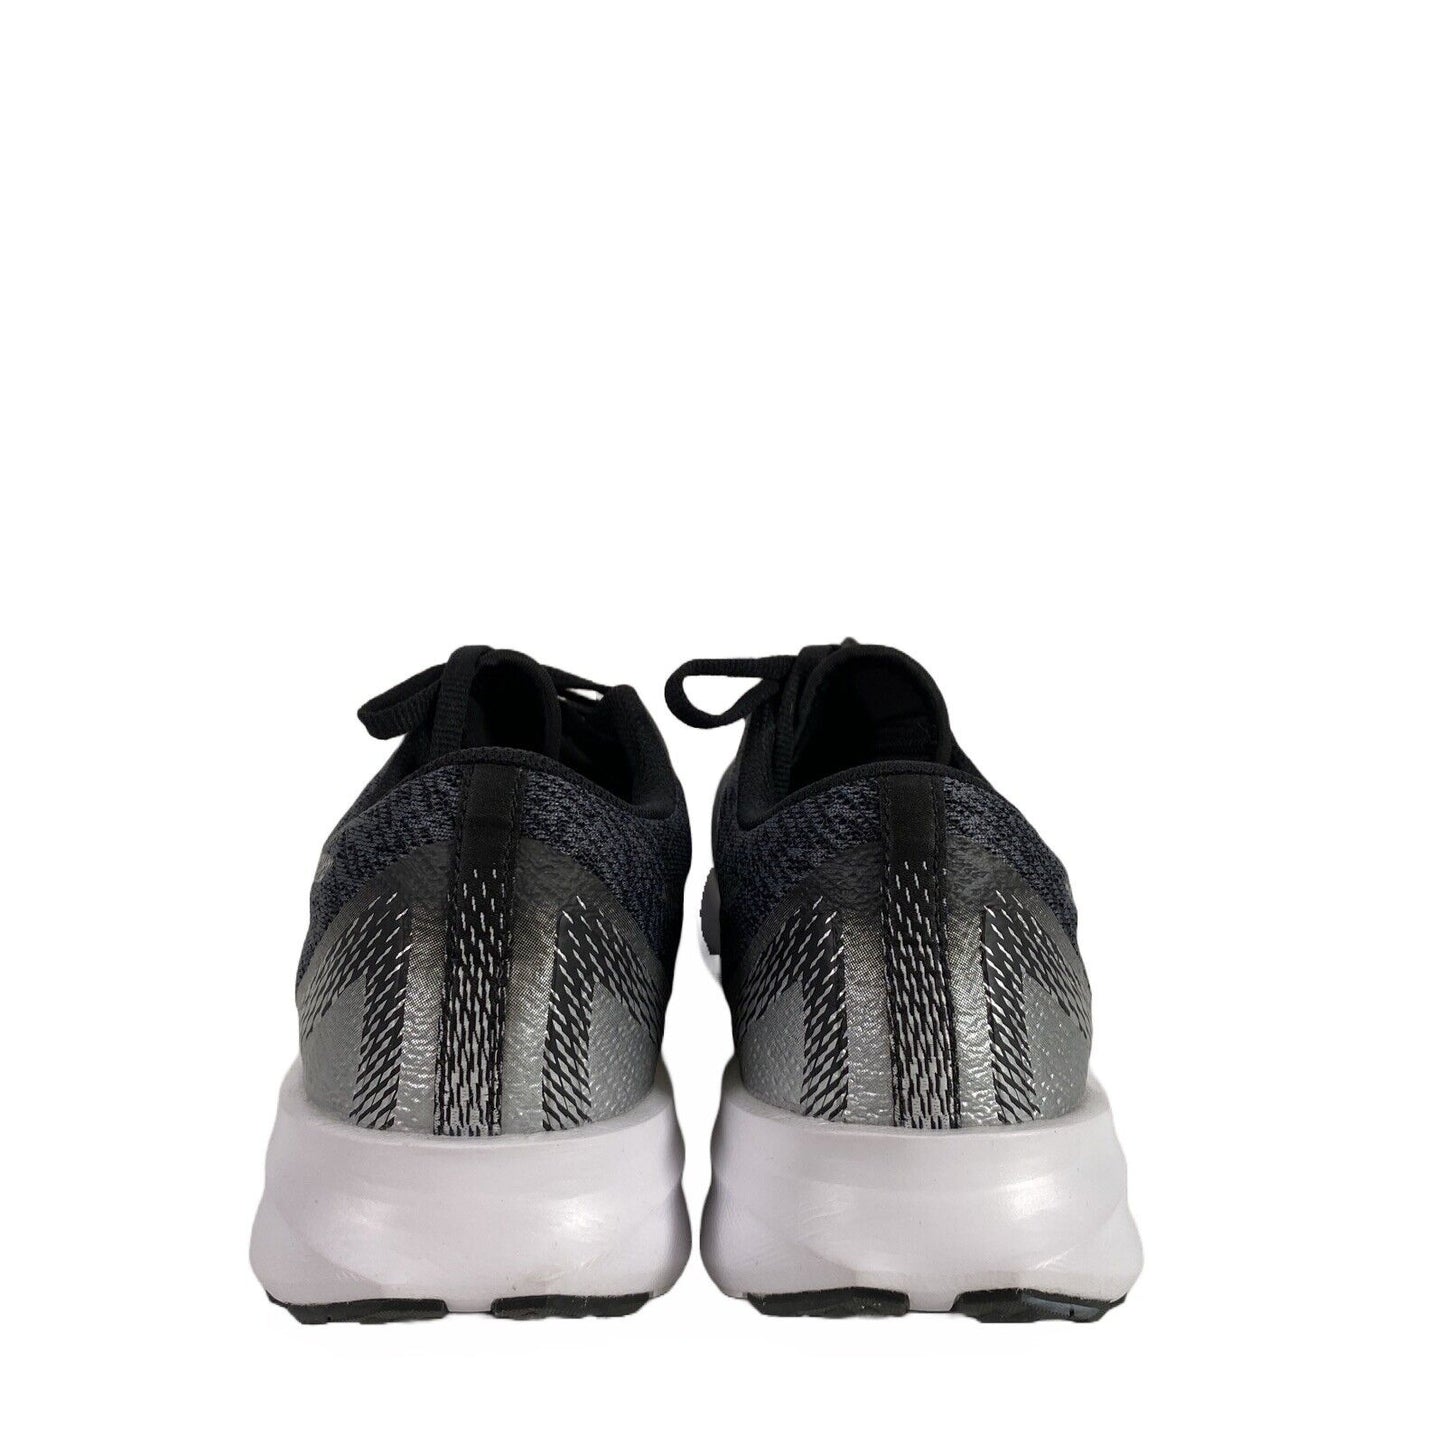 Asics Women's Dark Gray Versablast Lace Up Athletic Shoes - 9.5